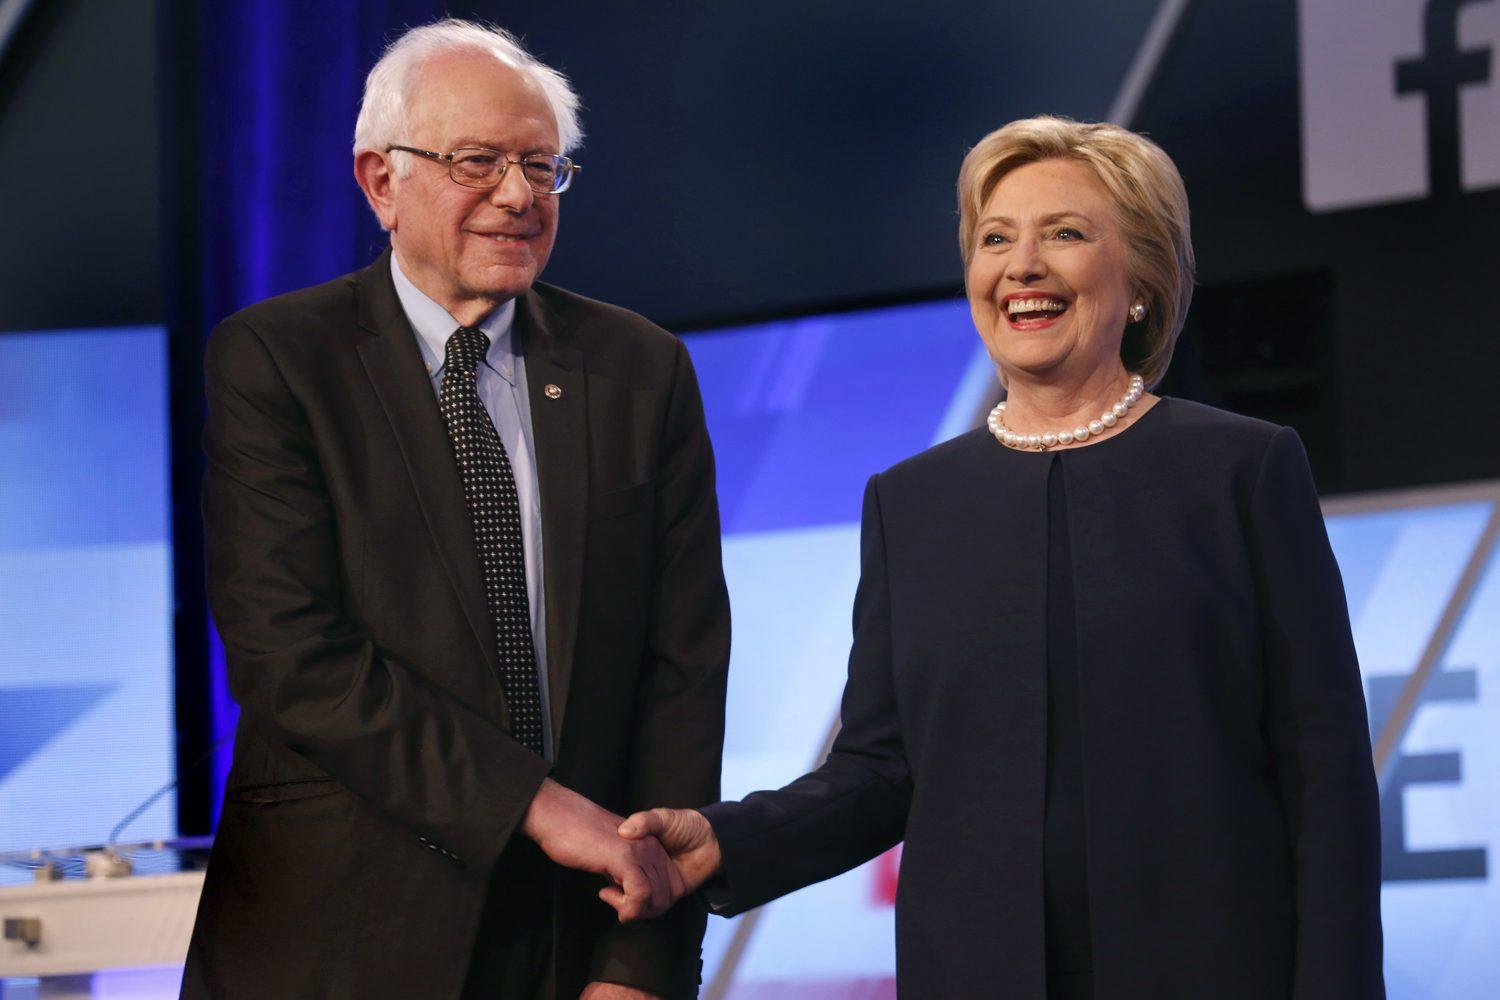 Bernie Sanders and Hillary Clinton shake hands